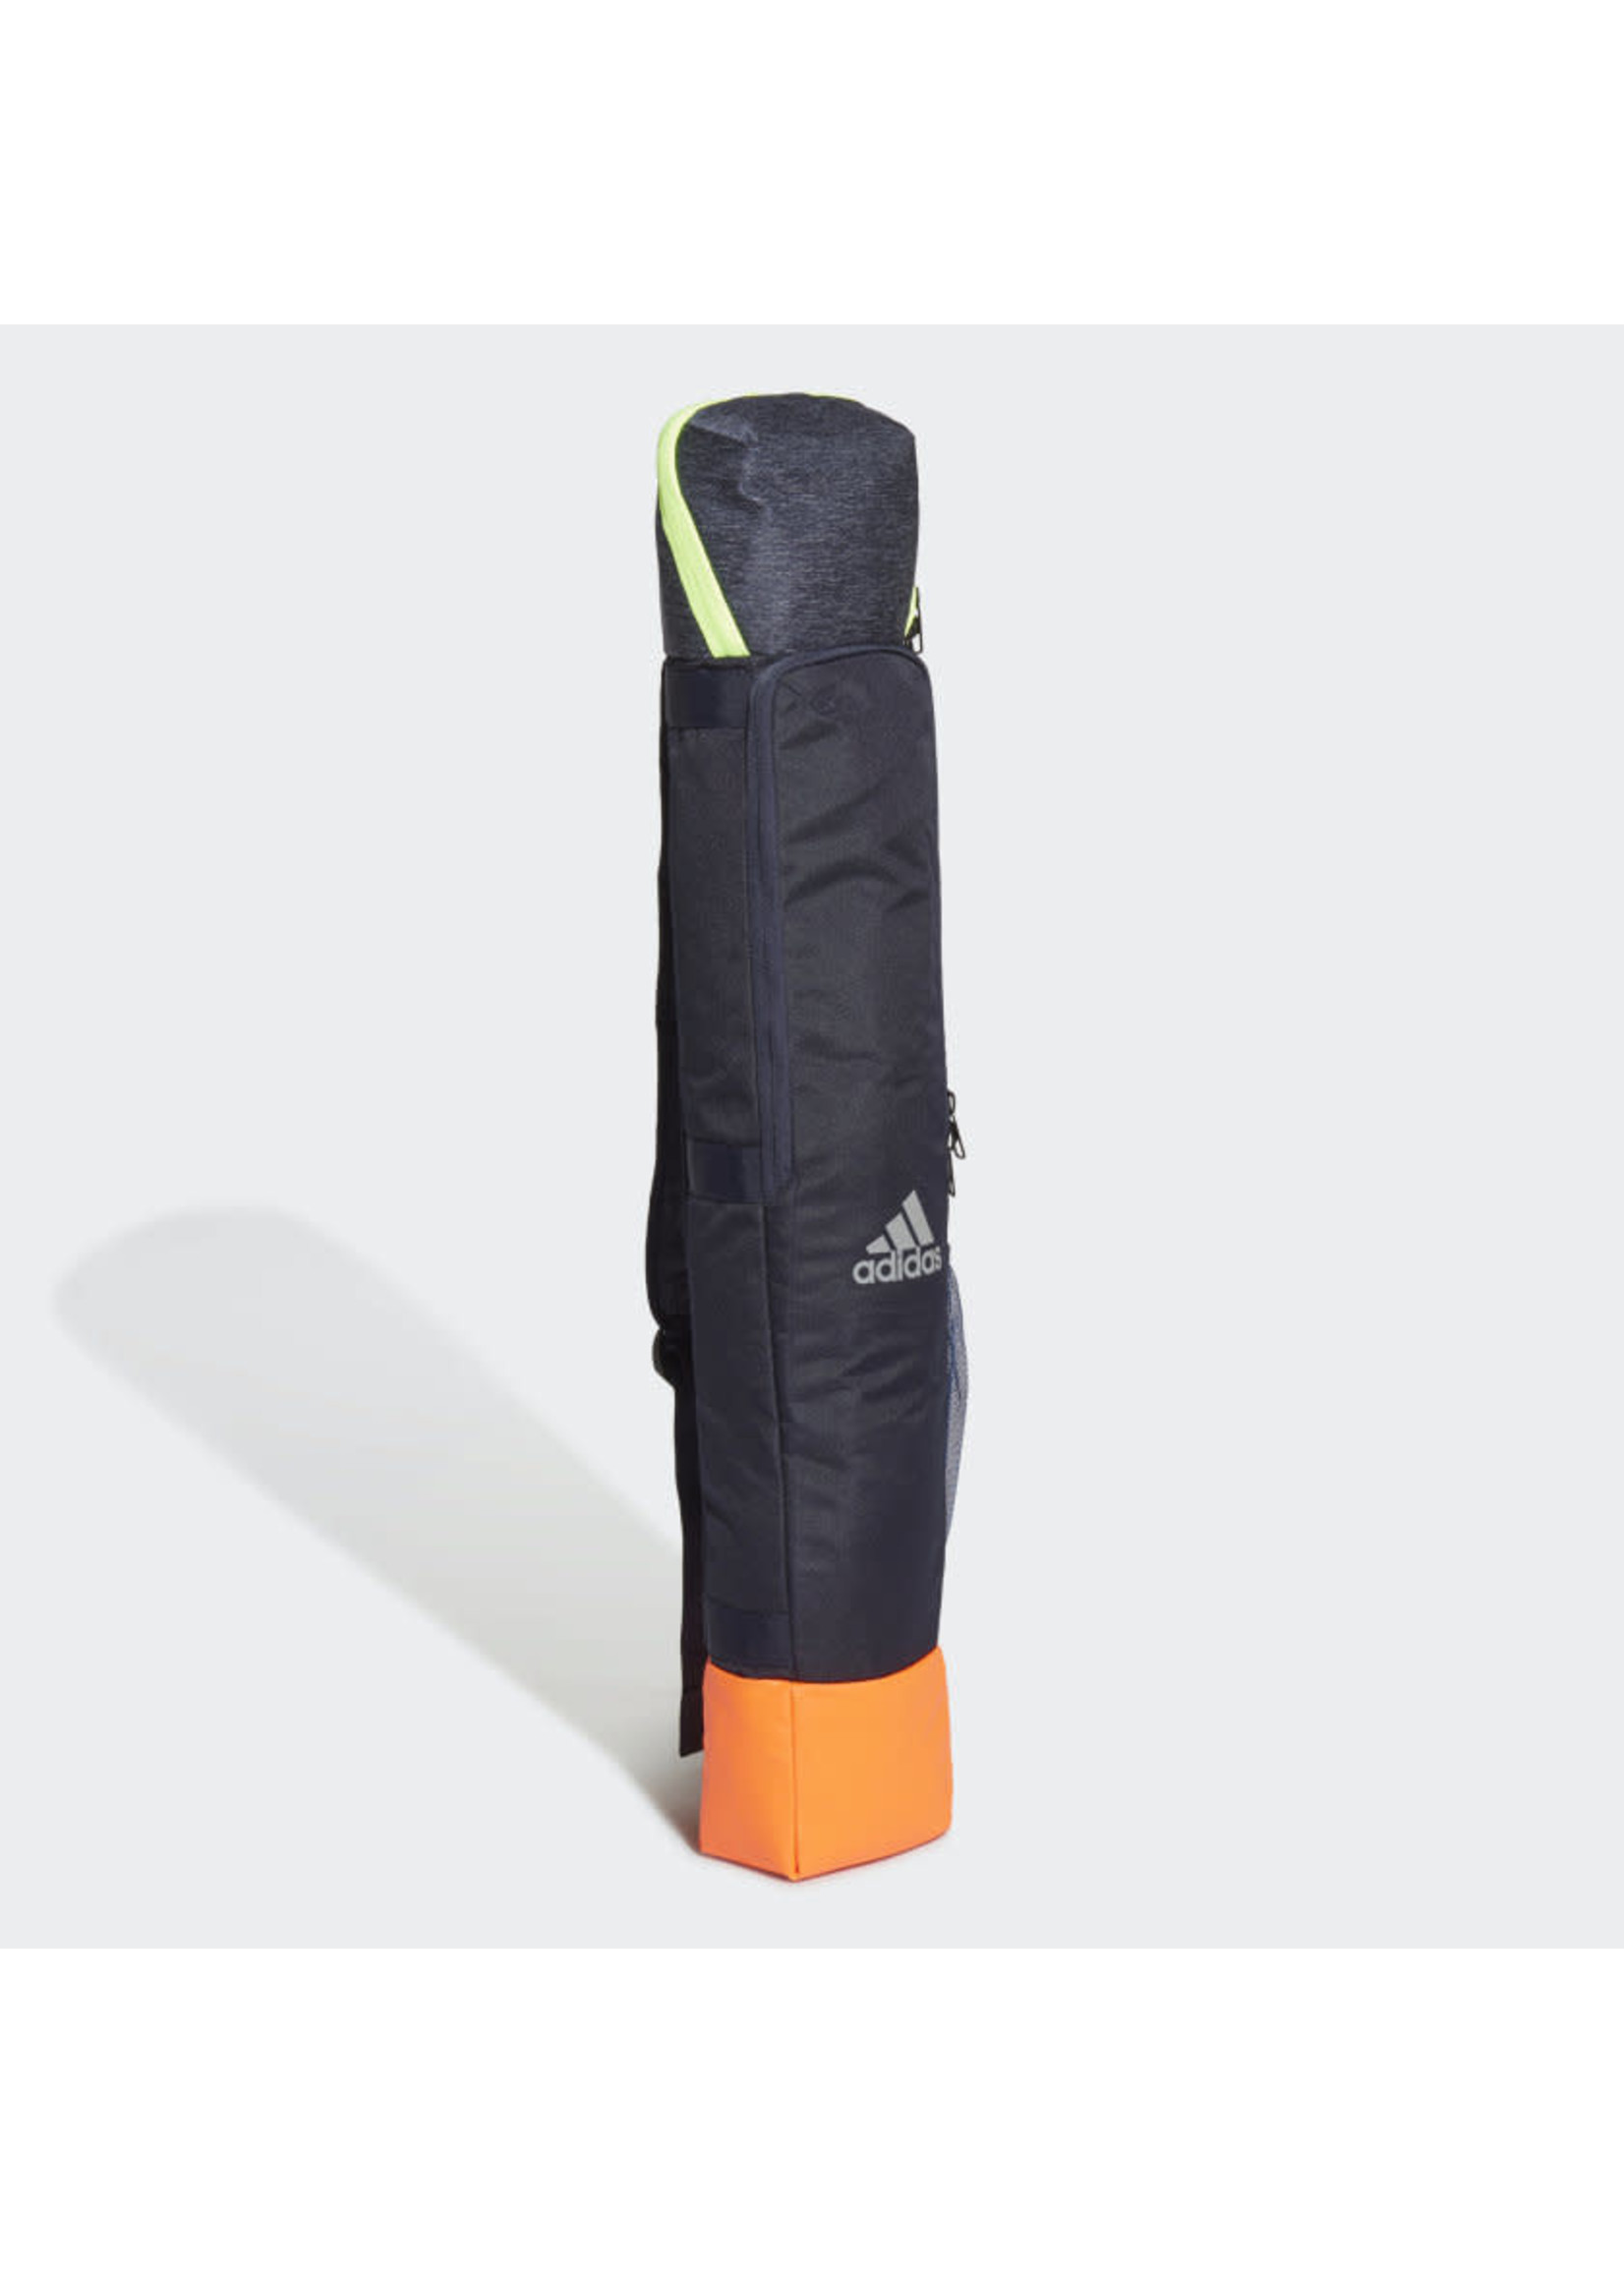 Adidas Adidas VS2 Hockey Stick Bag (2020)